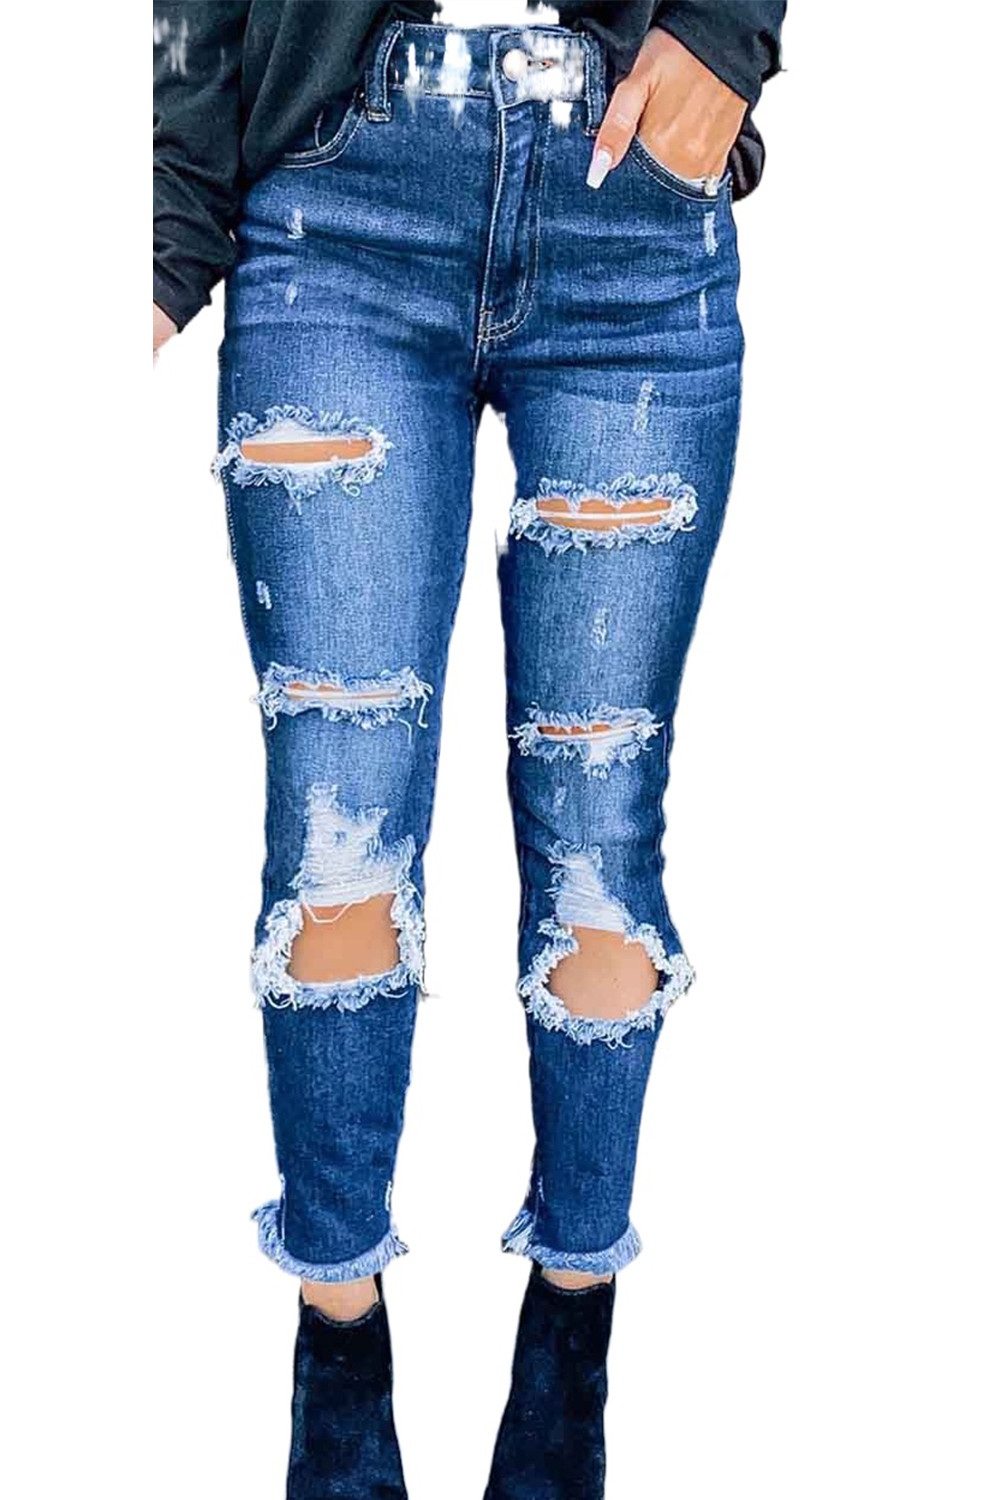 Wholesale Push it production, Cheap Dark Blue Distressed Holes Jeans Online